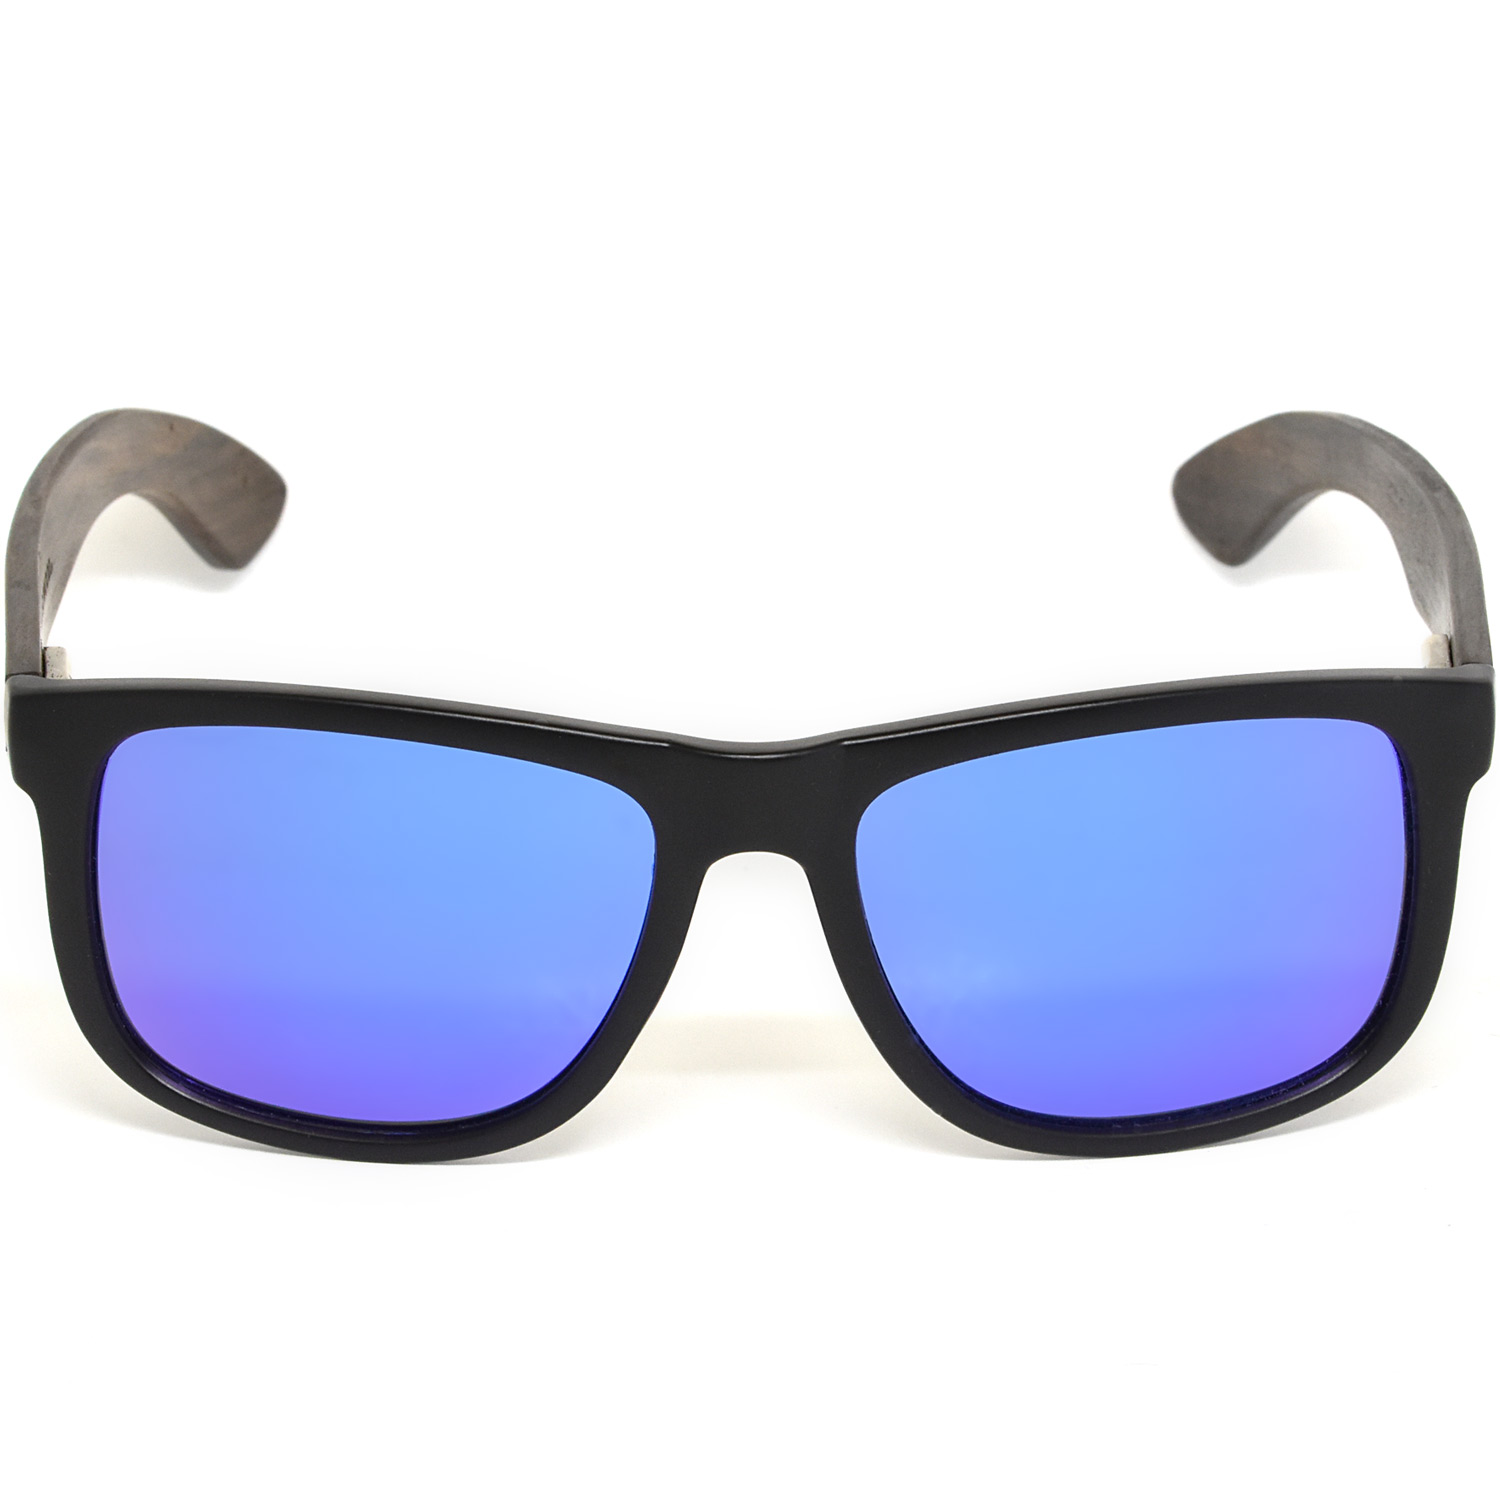 Square ebony wood sunglasses blue mirrored polarized lenses acetate front